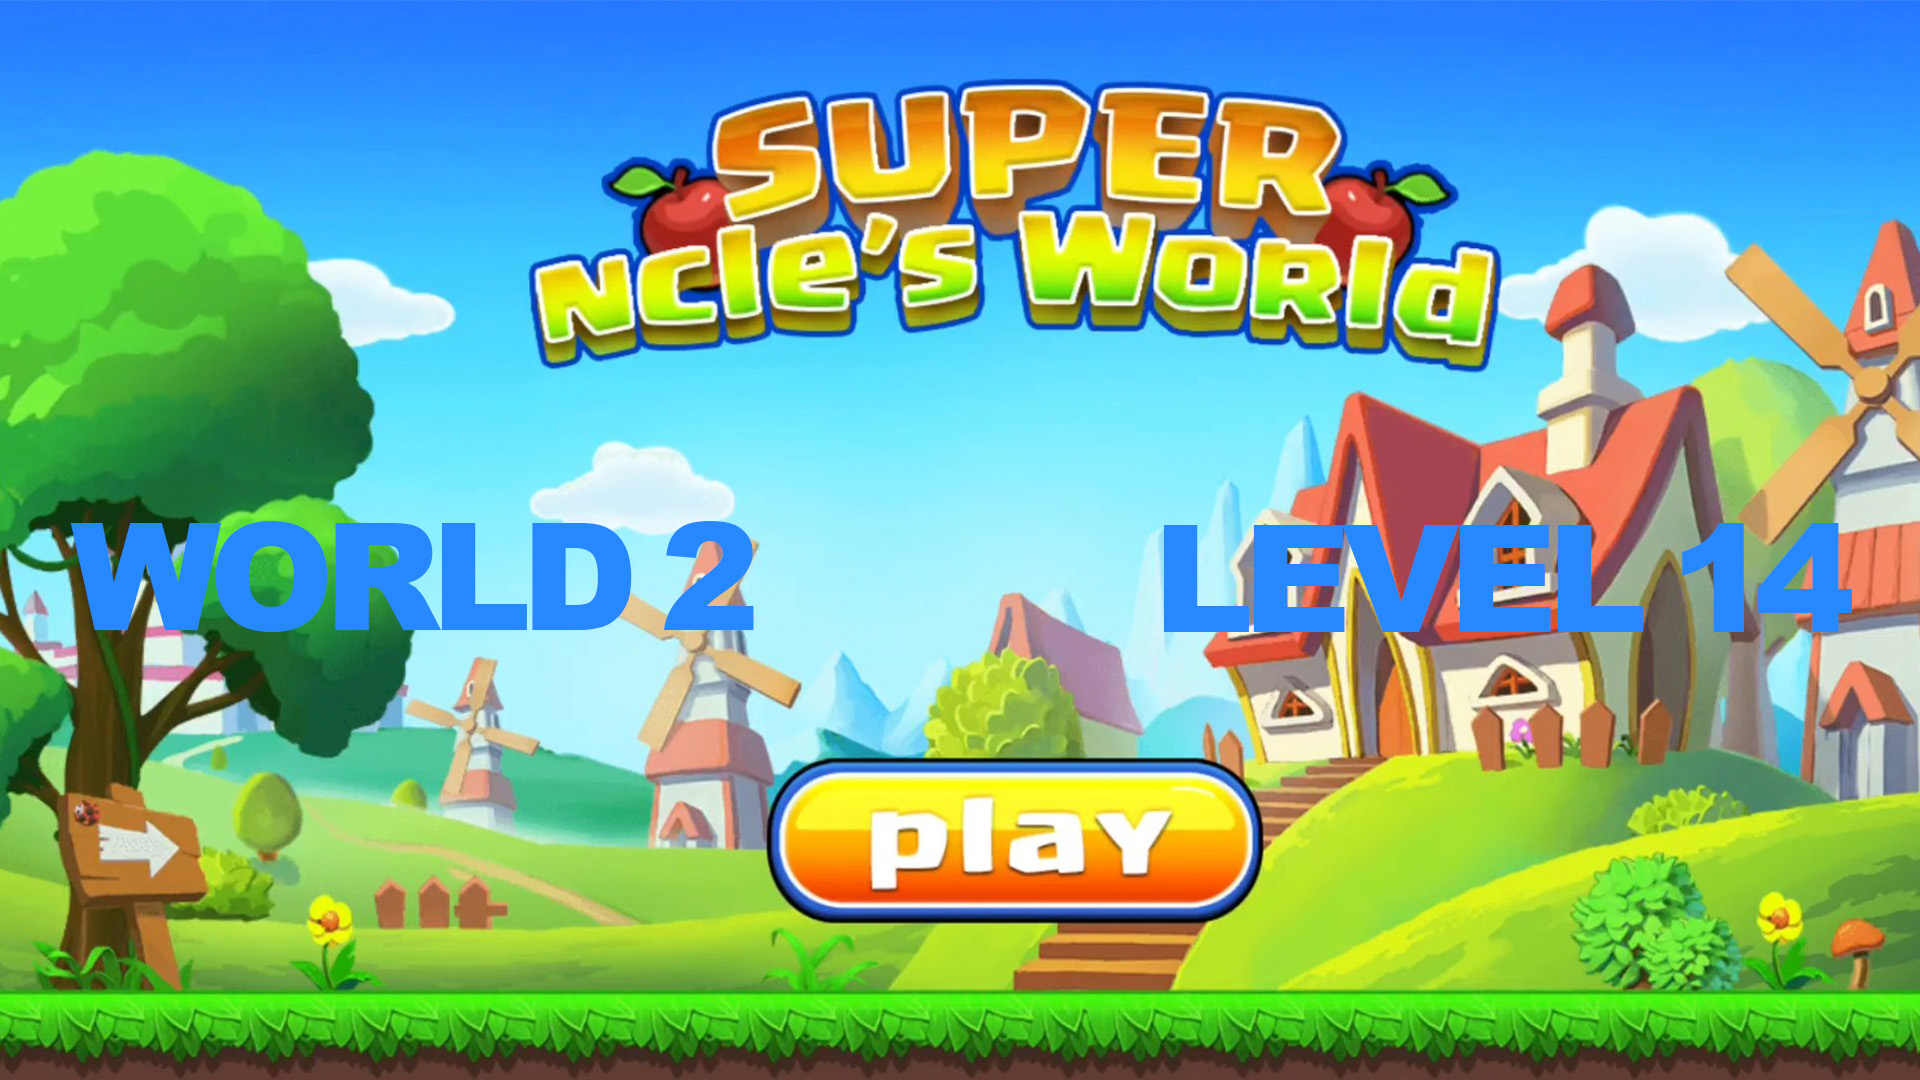 Super ncle's  World 2. level 14.